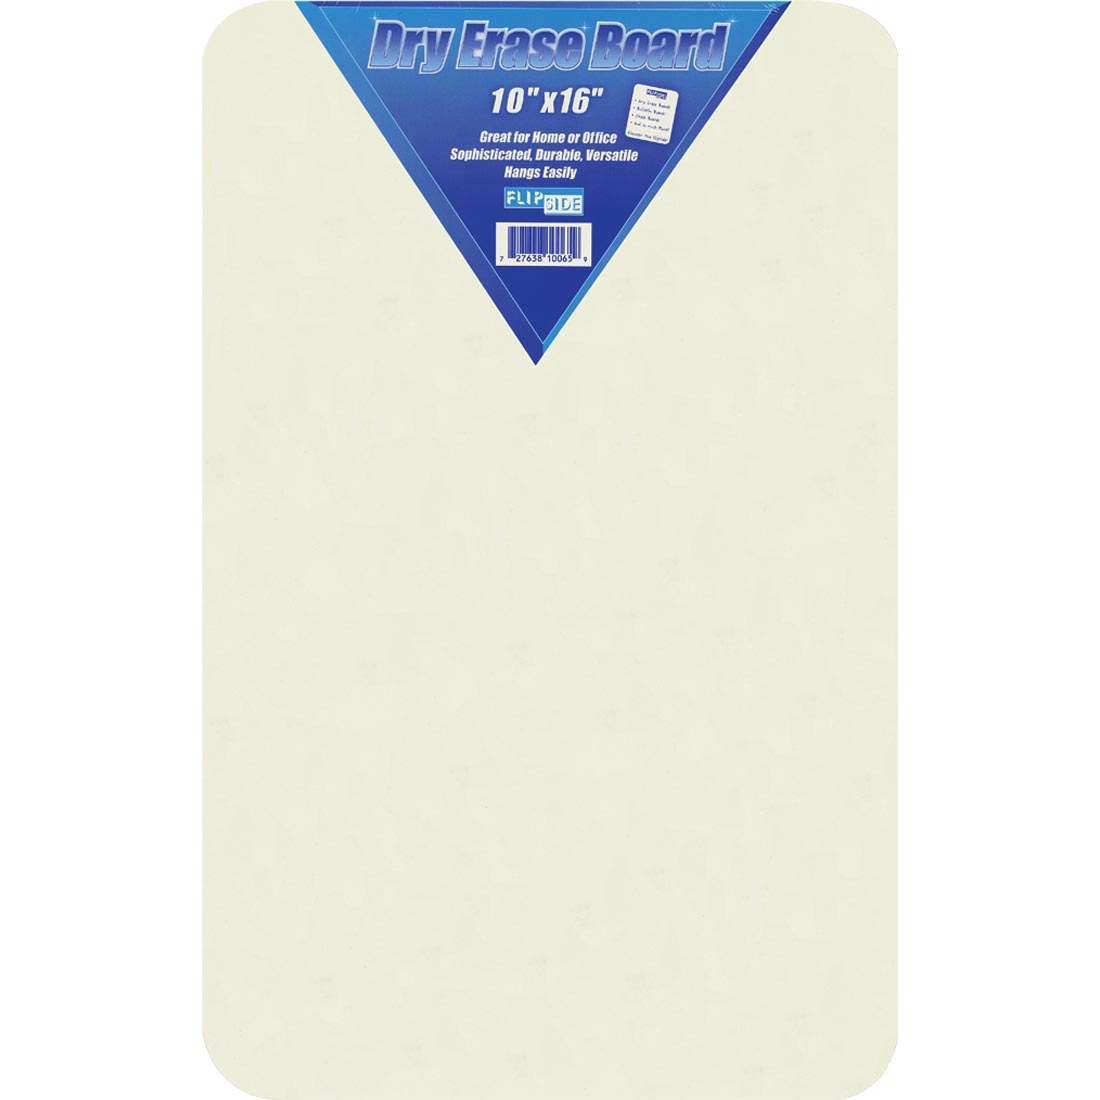 Flipside Dry Erase Board White 10x16"